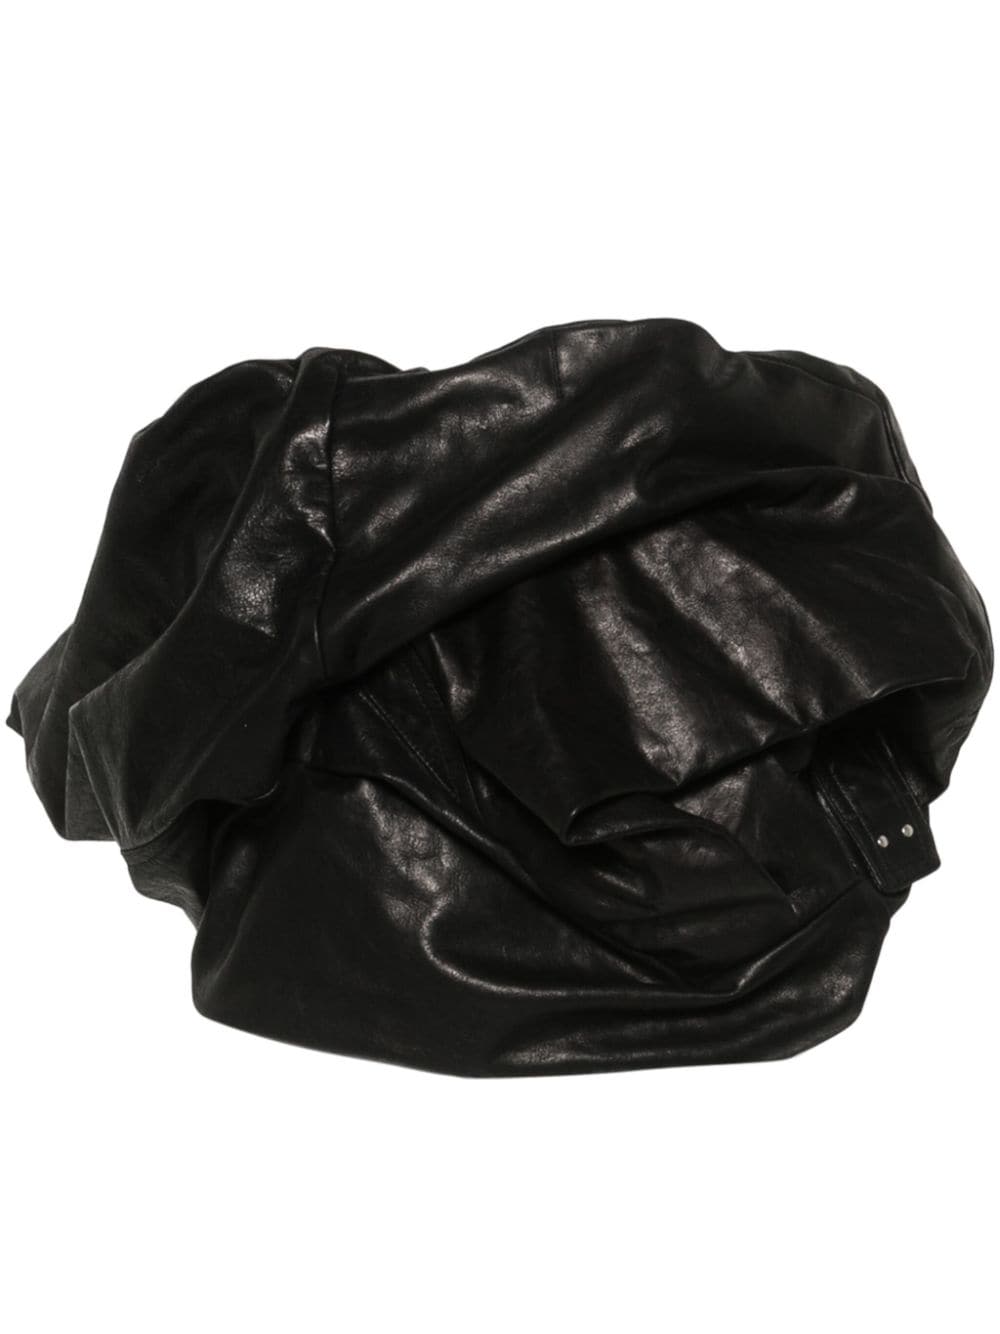 RICK OWENS Sleek Black Leather Bustier for Women with Asymmetric Draped Design